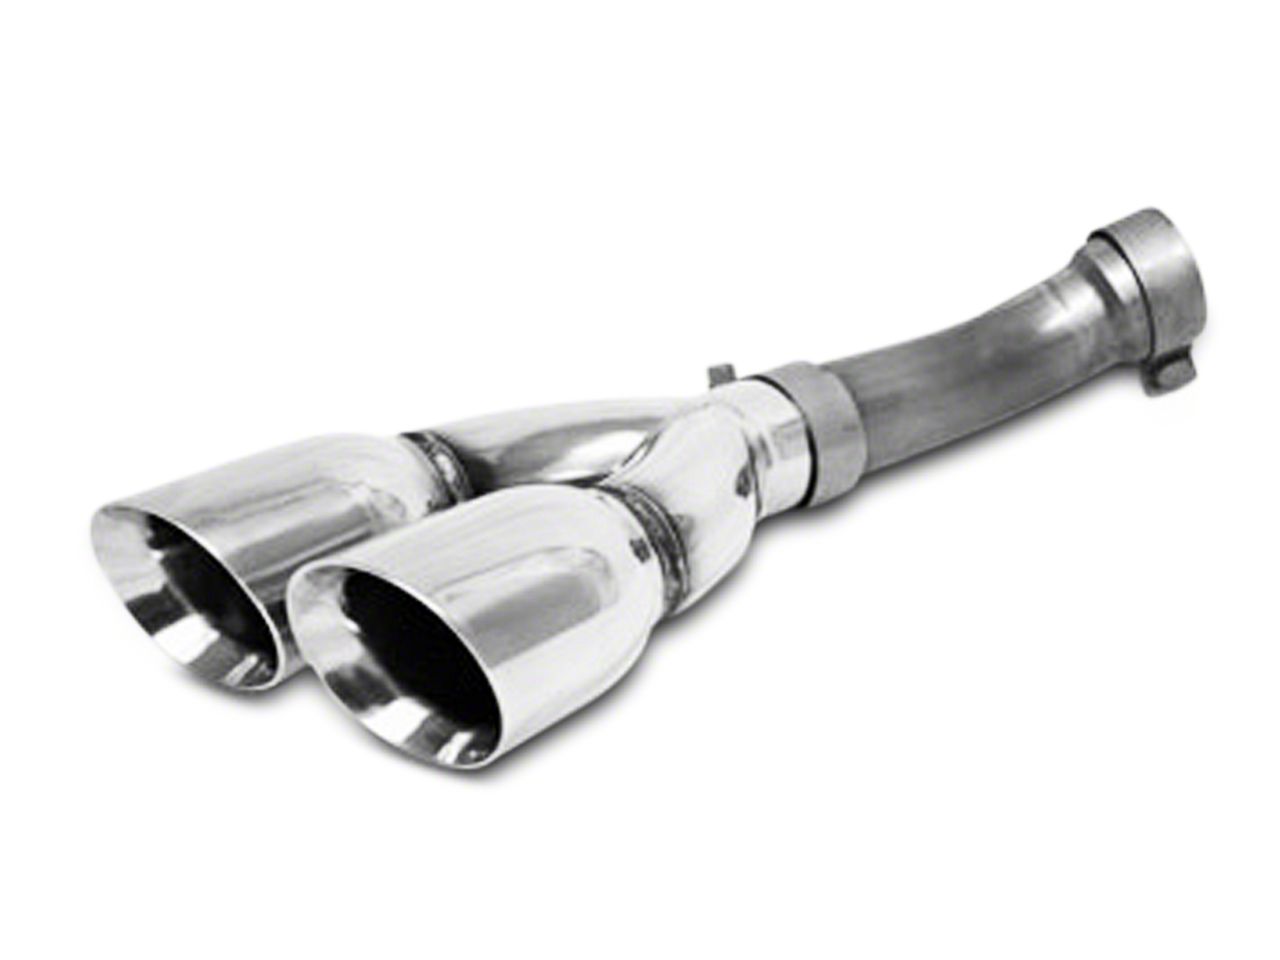 Silverado Exhaust Tips 2007-2013